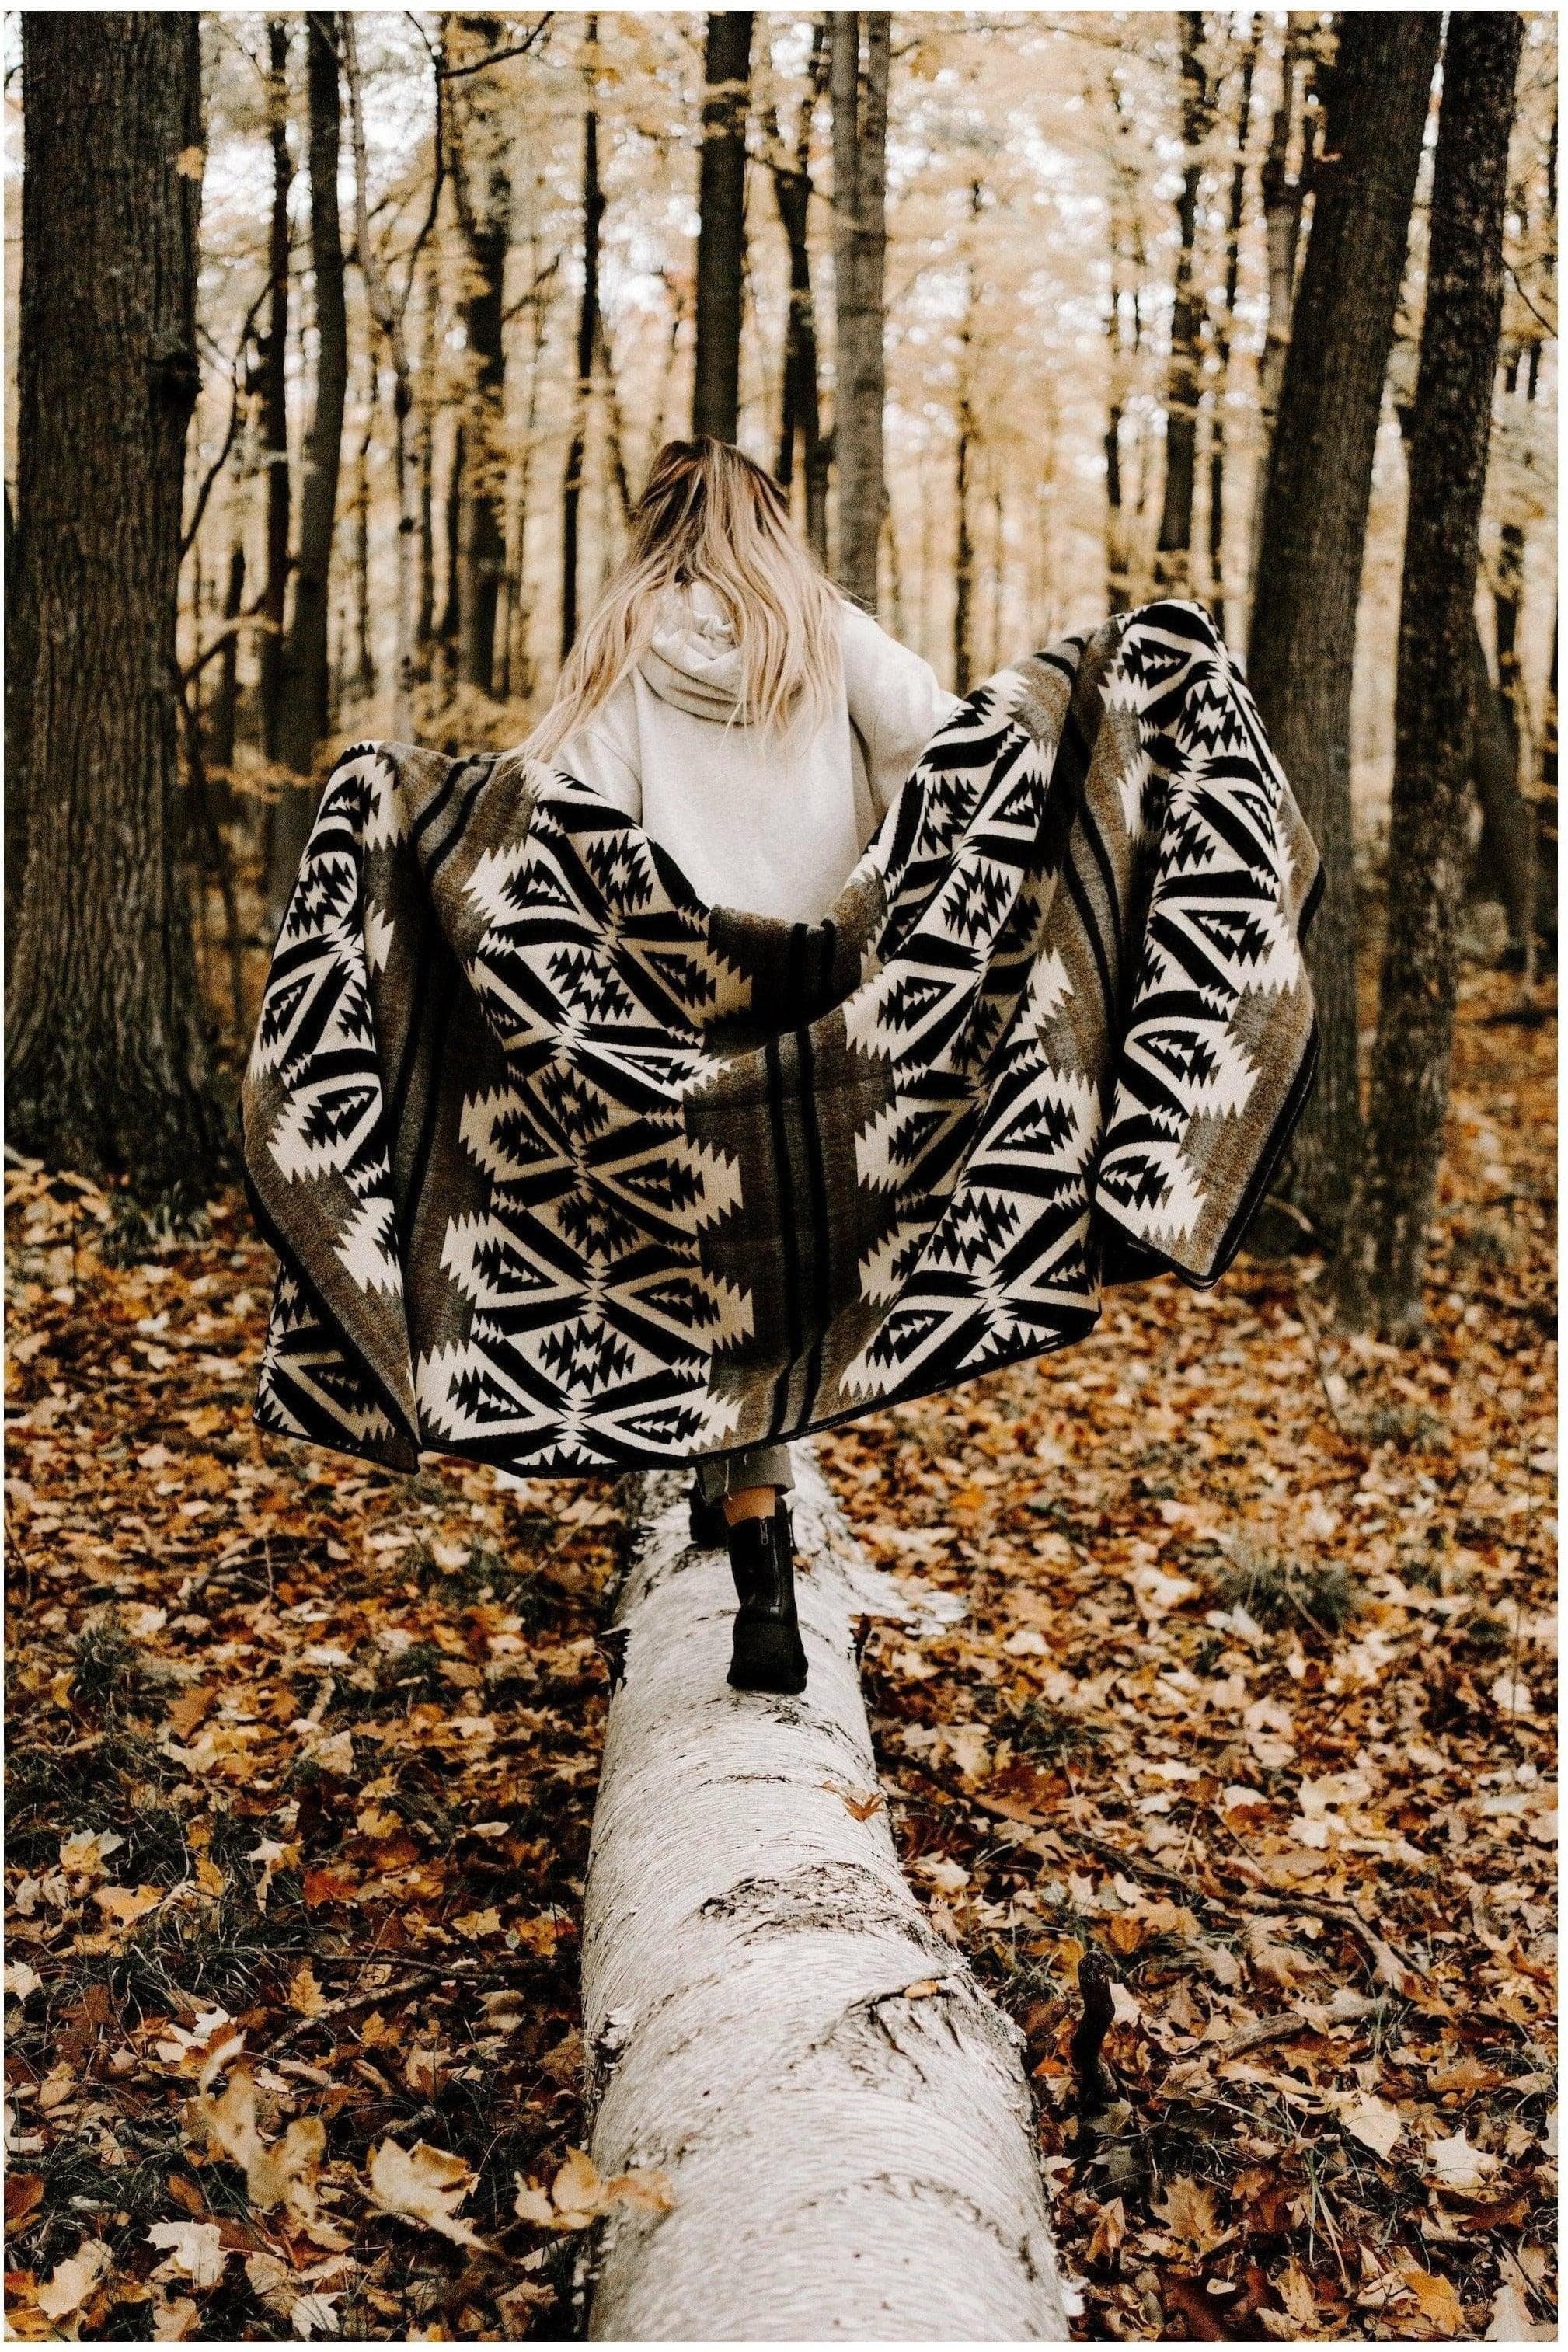 Quichua Blanket - Onyx Black - SwagglyLife Home & Fashion